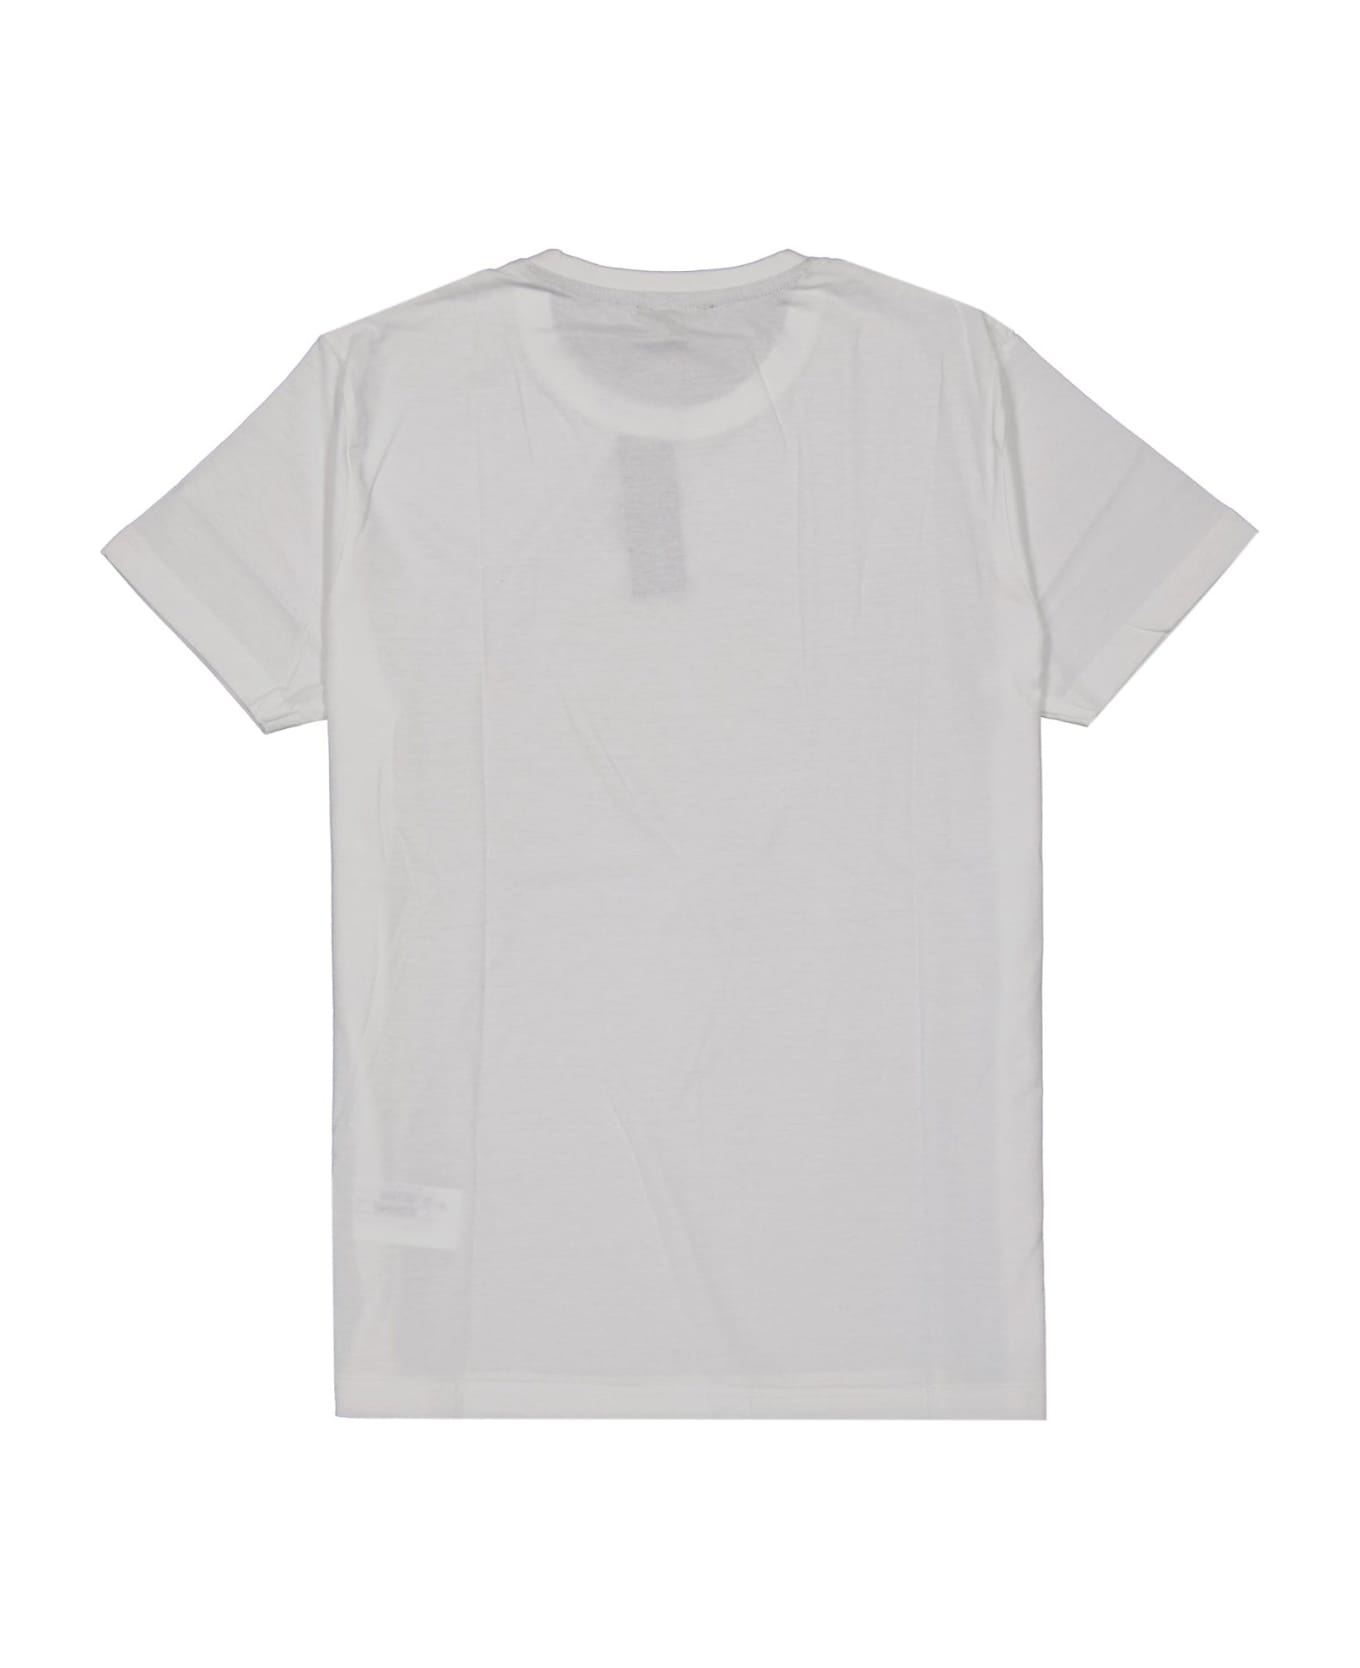 Cesare Paciotti Cotton T-shirt - White